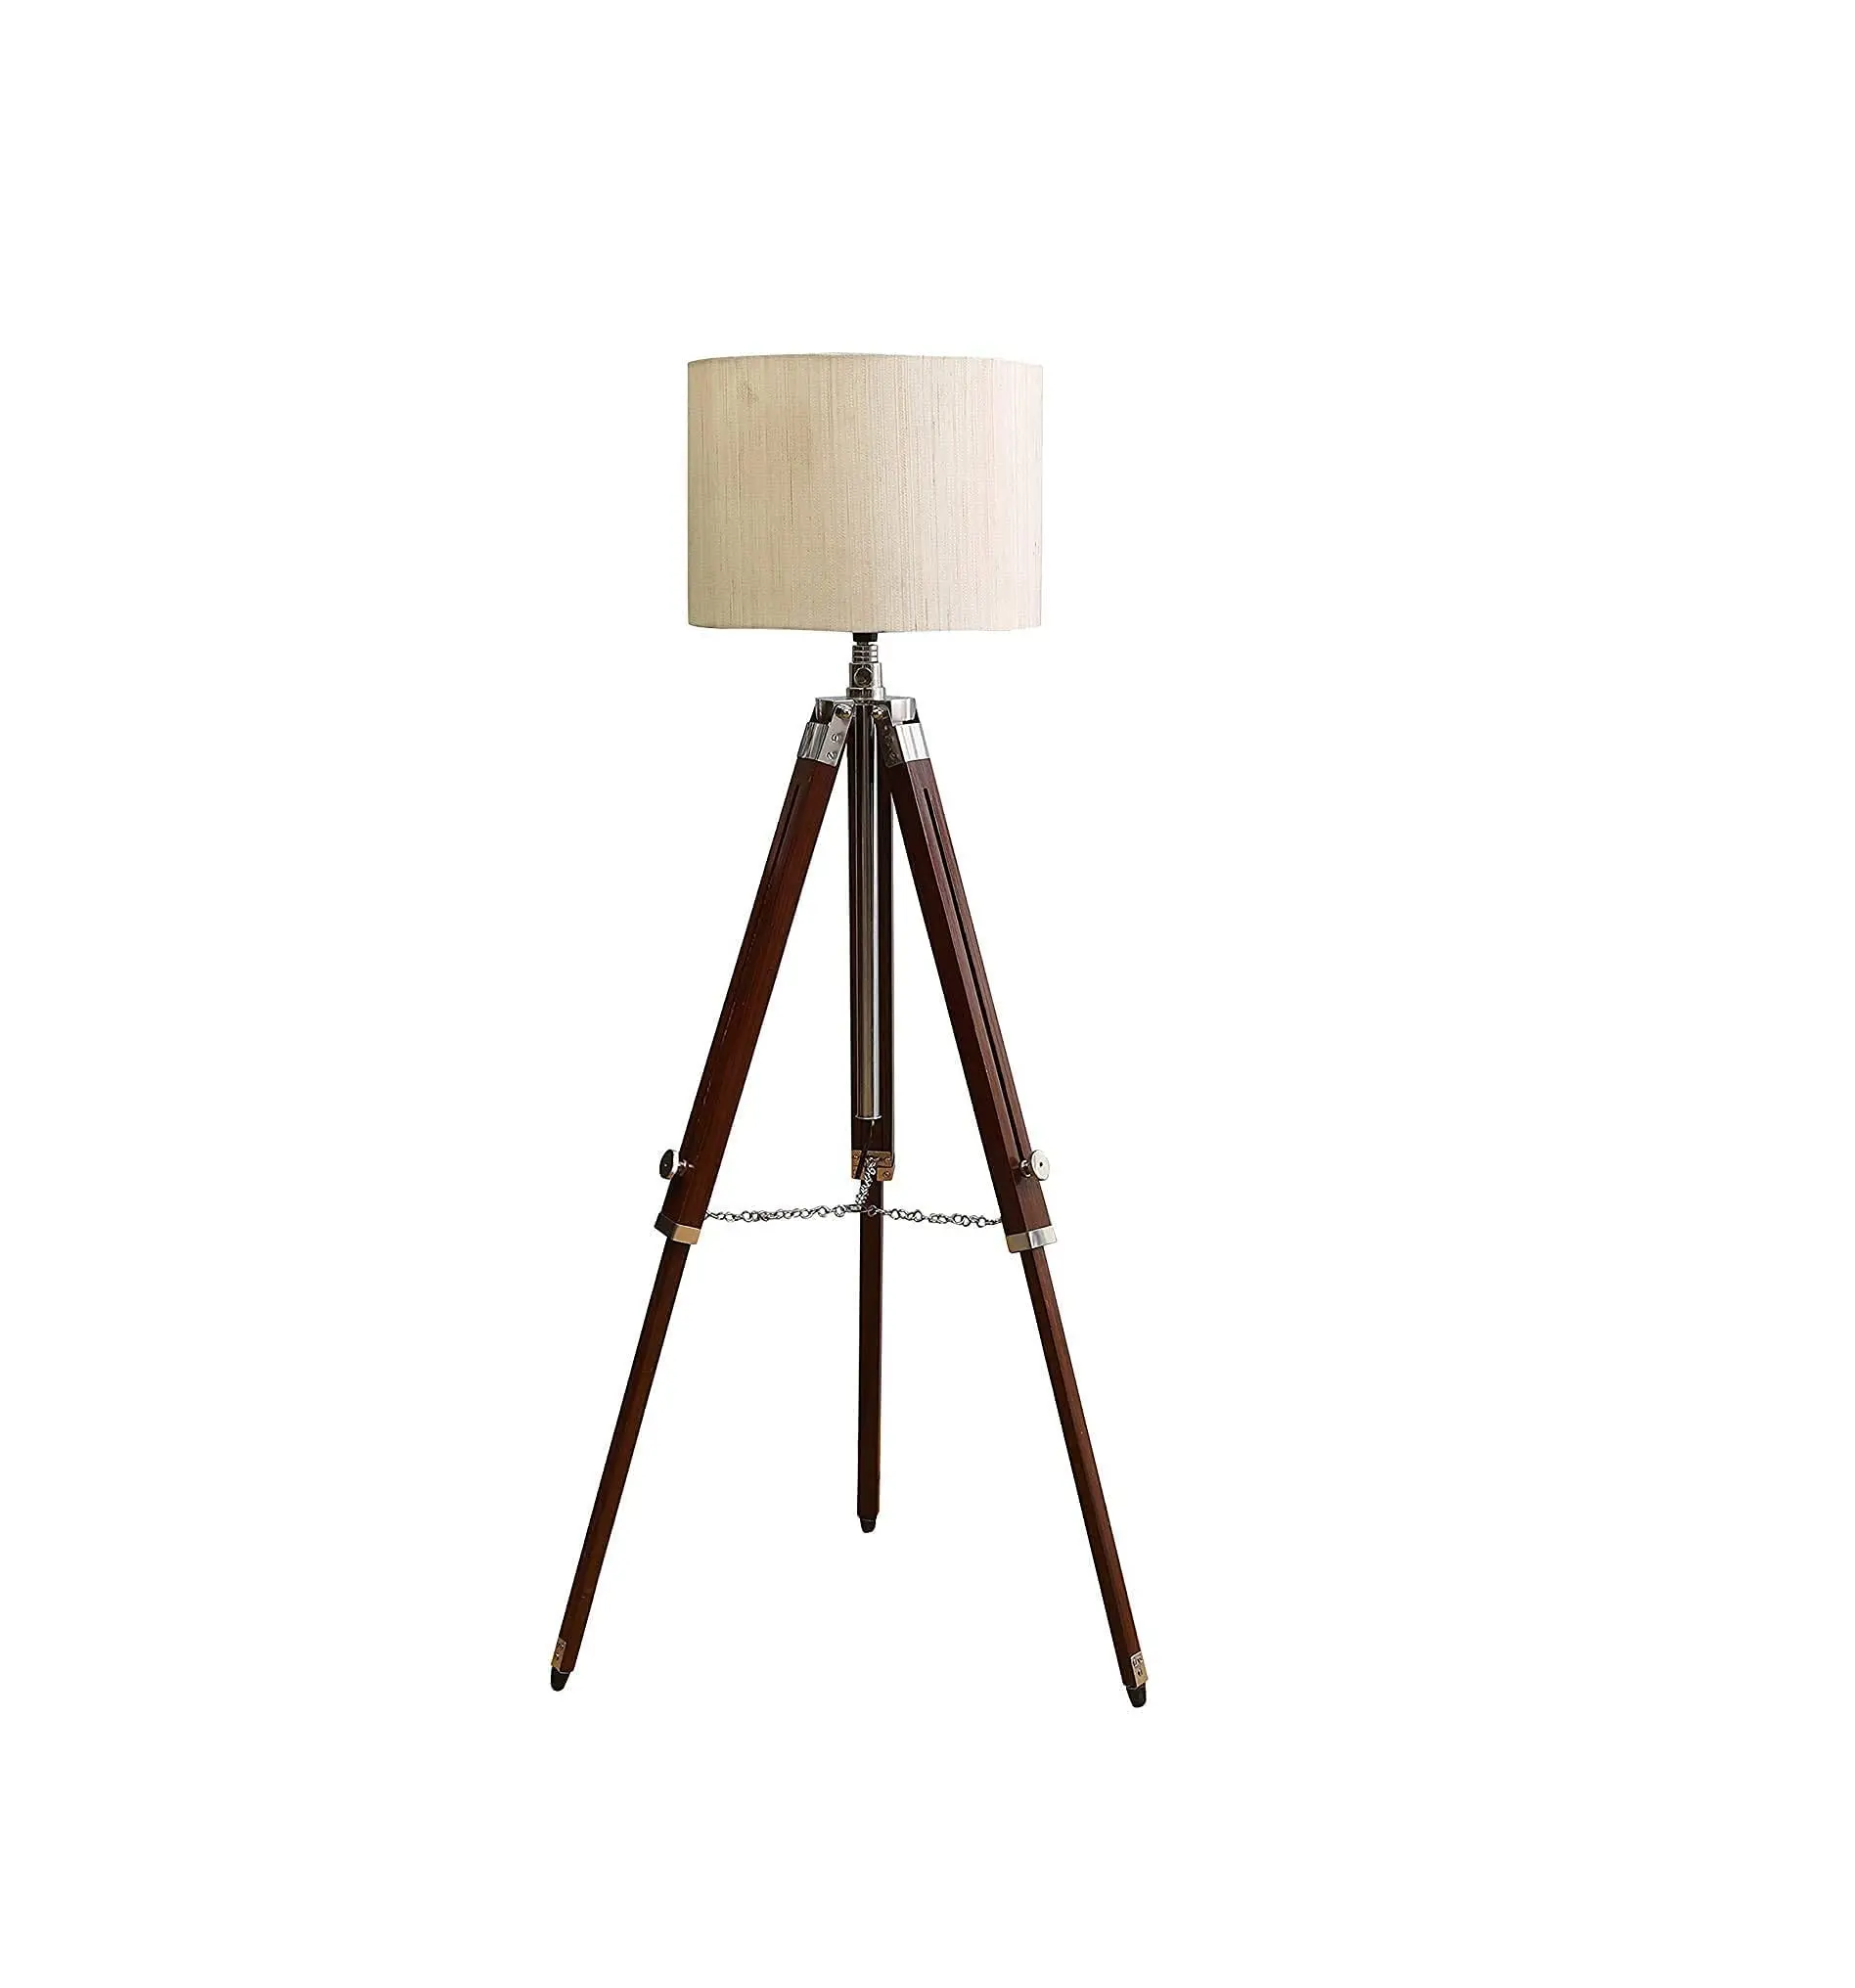 Trípode plegable de madera, lámpara de pie con pantalla de yute para decoración del hogar